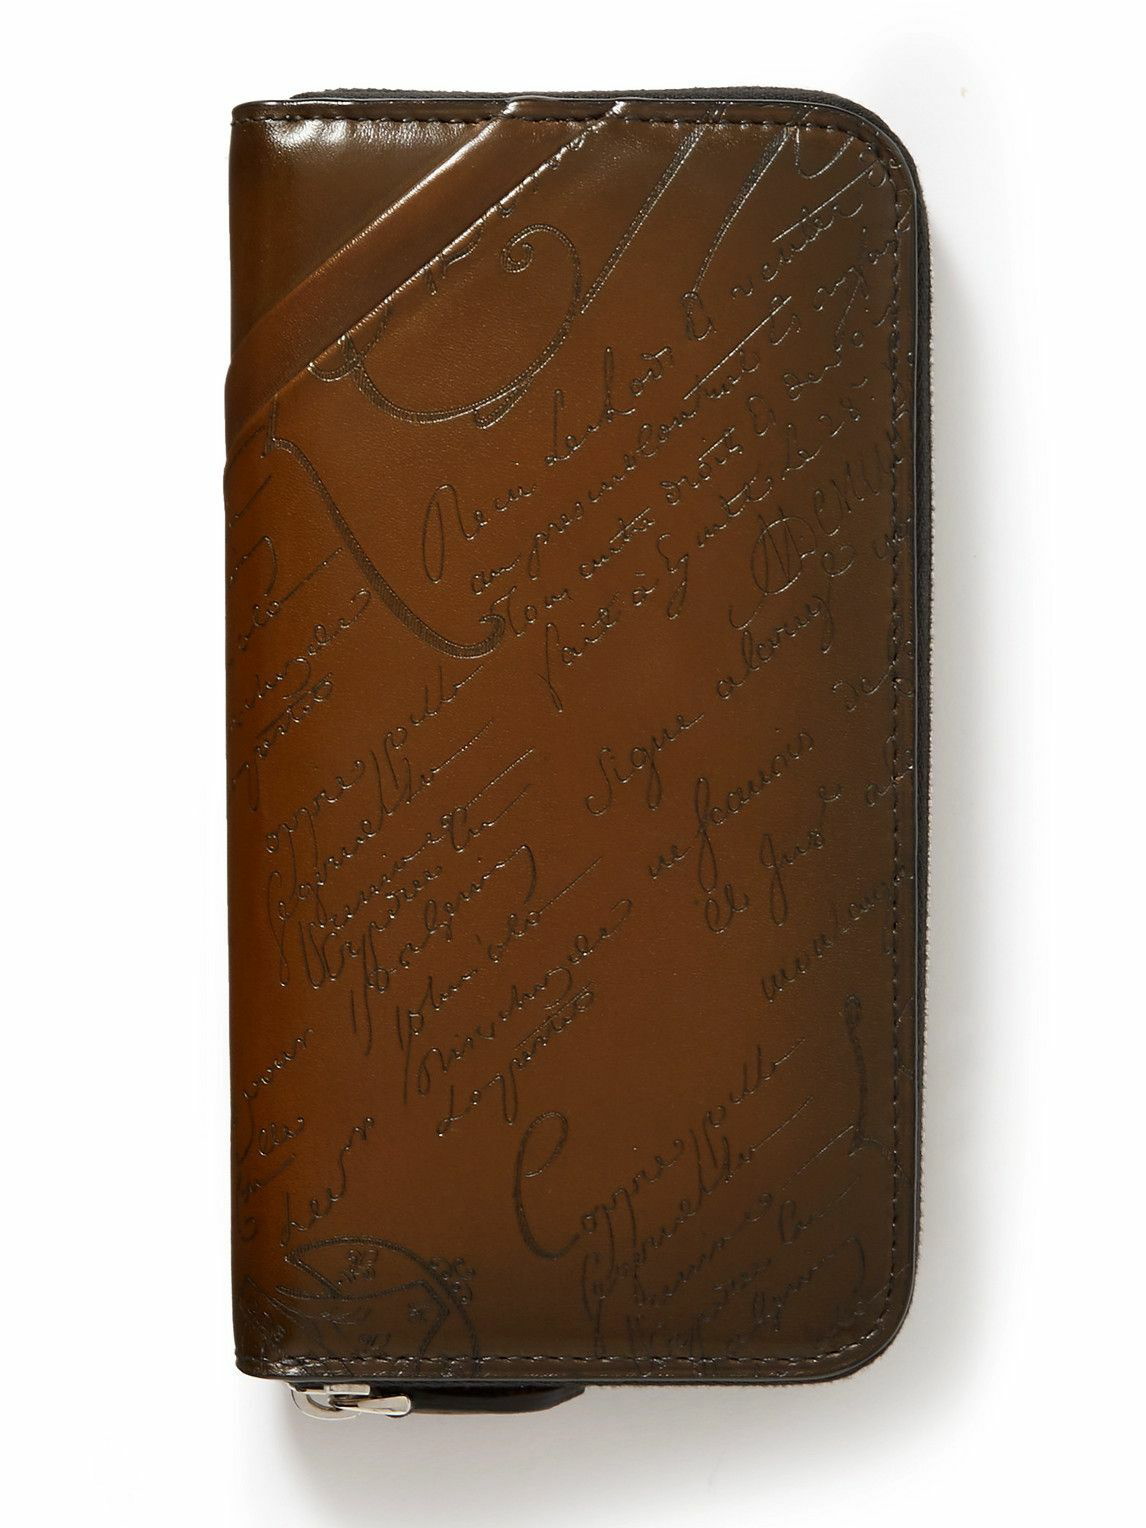 Berluti - Clip Signature Canvas and Leather Billfold Wallet Berluti